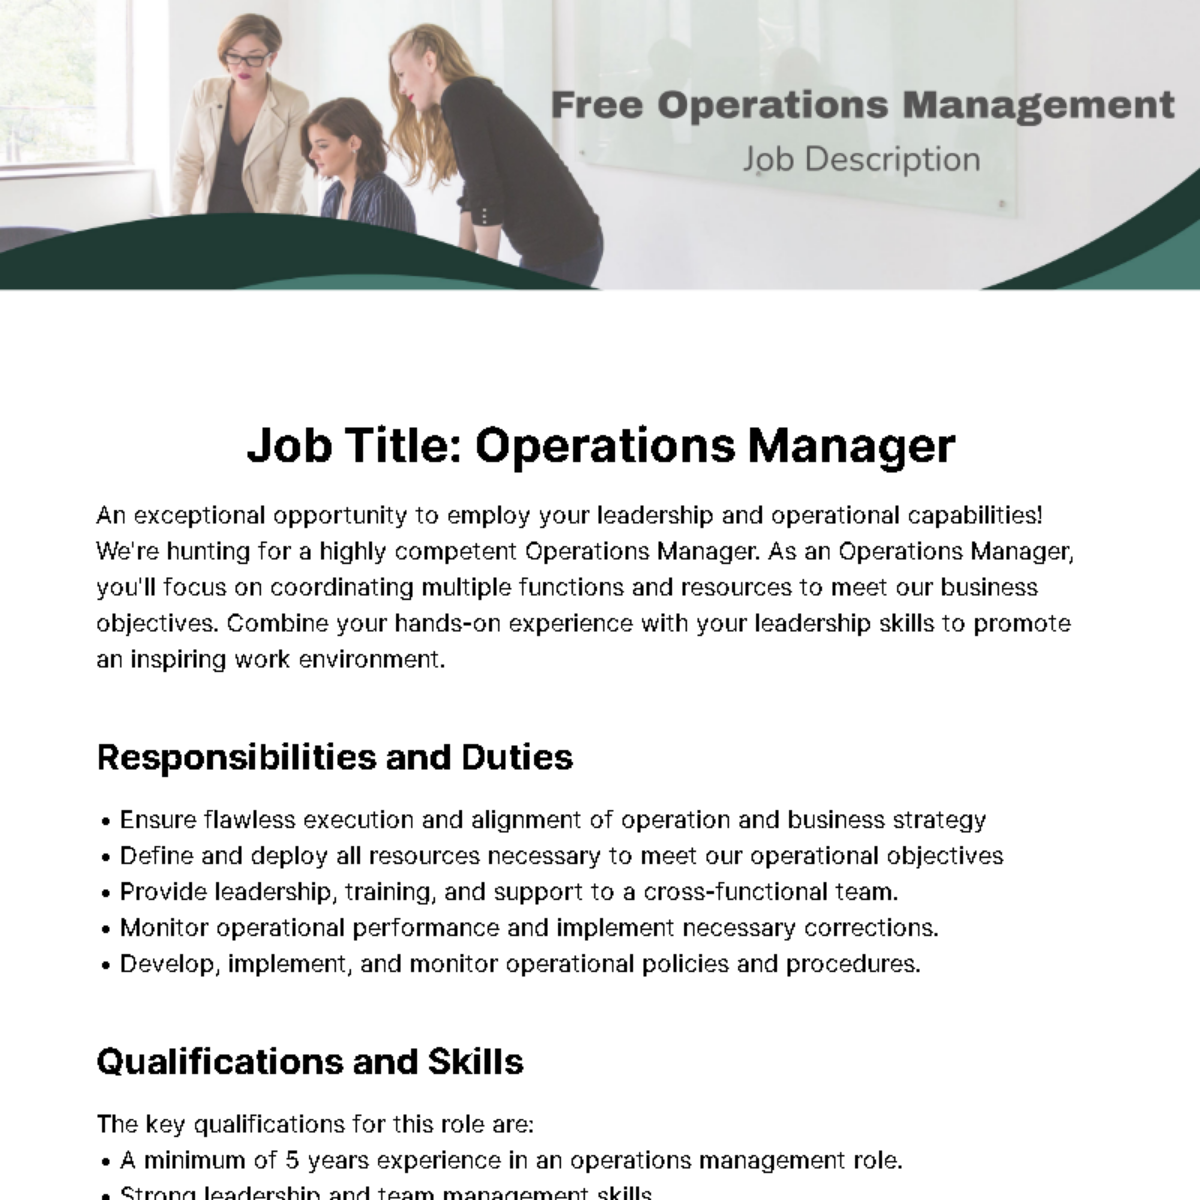 Free Operations Management Job Description Template